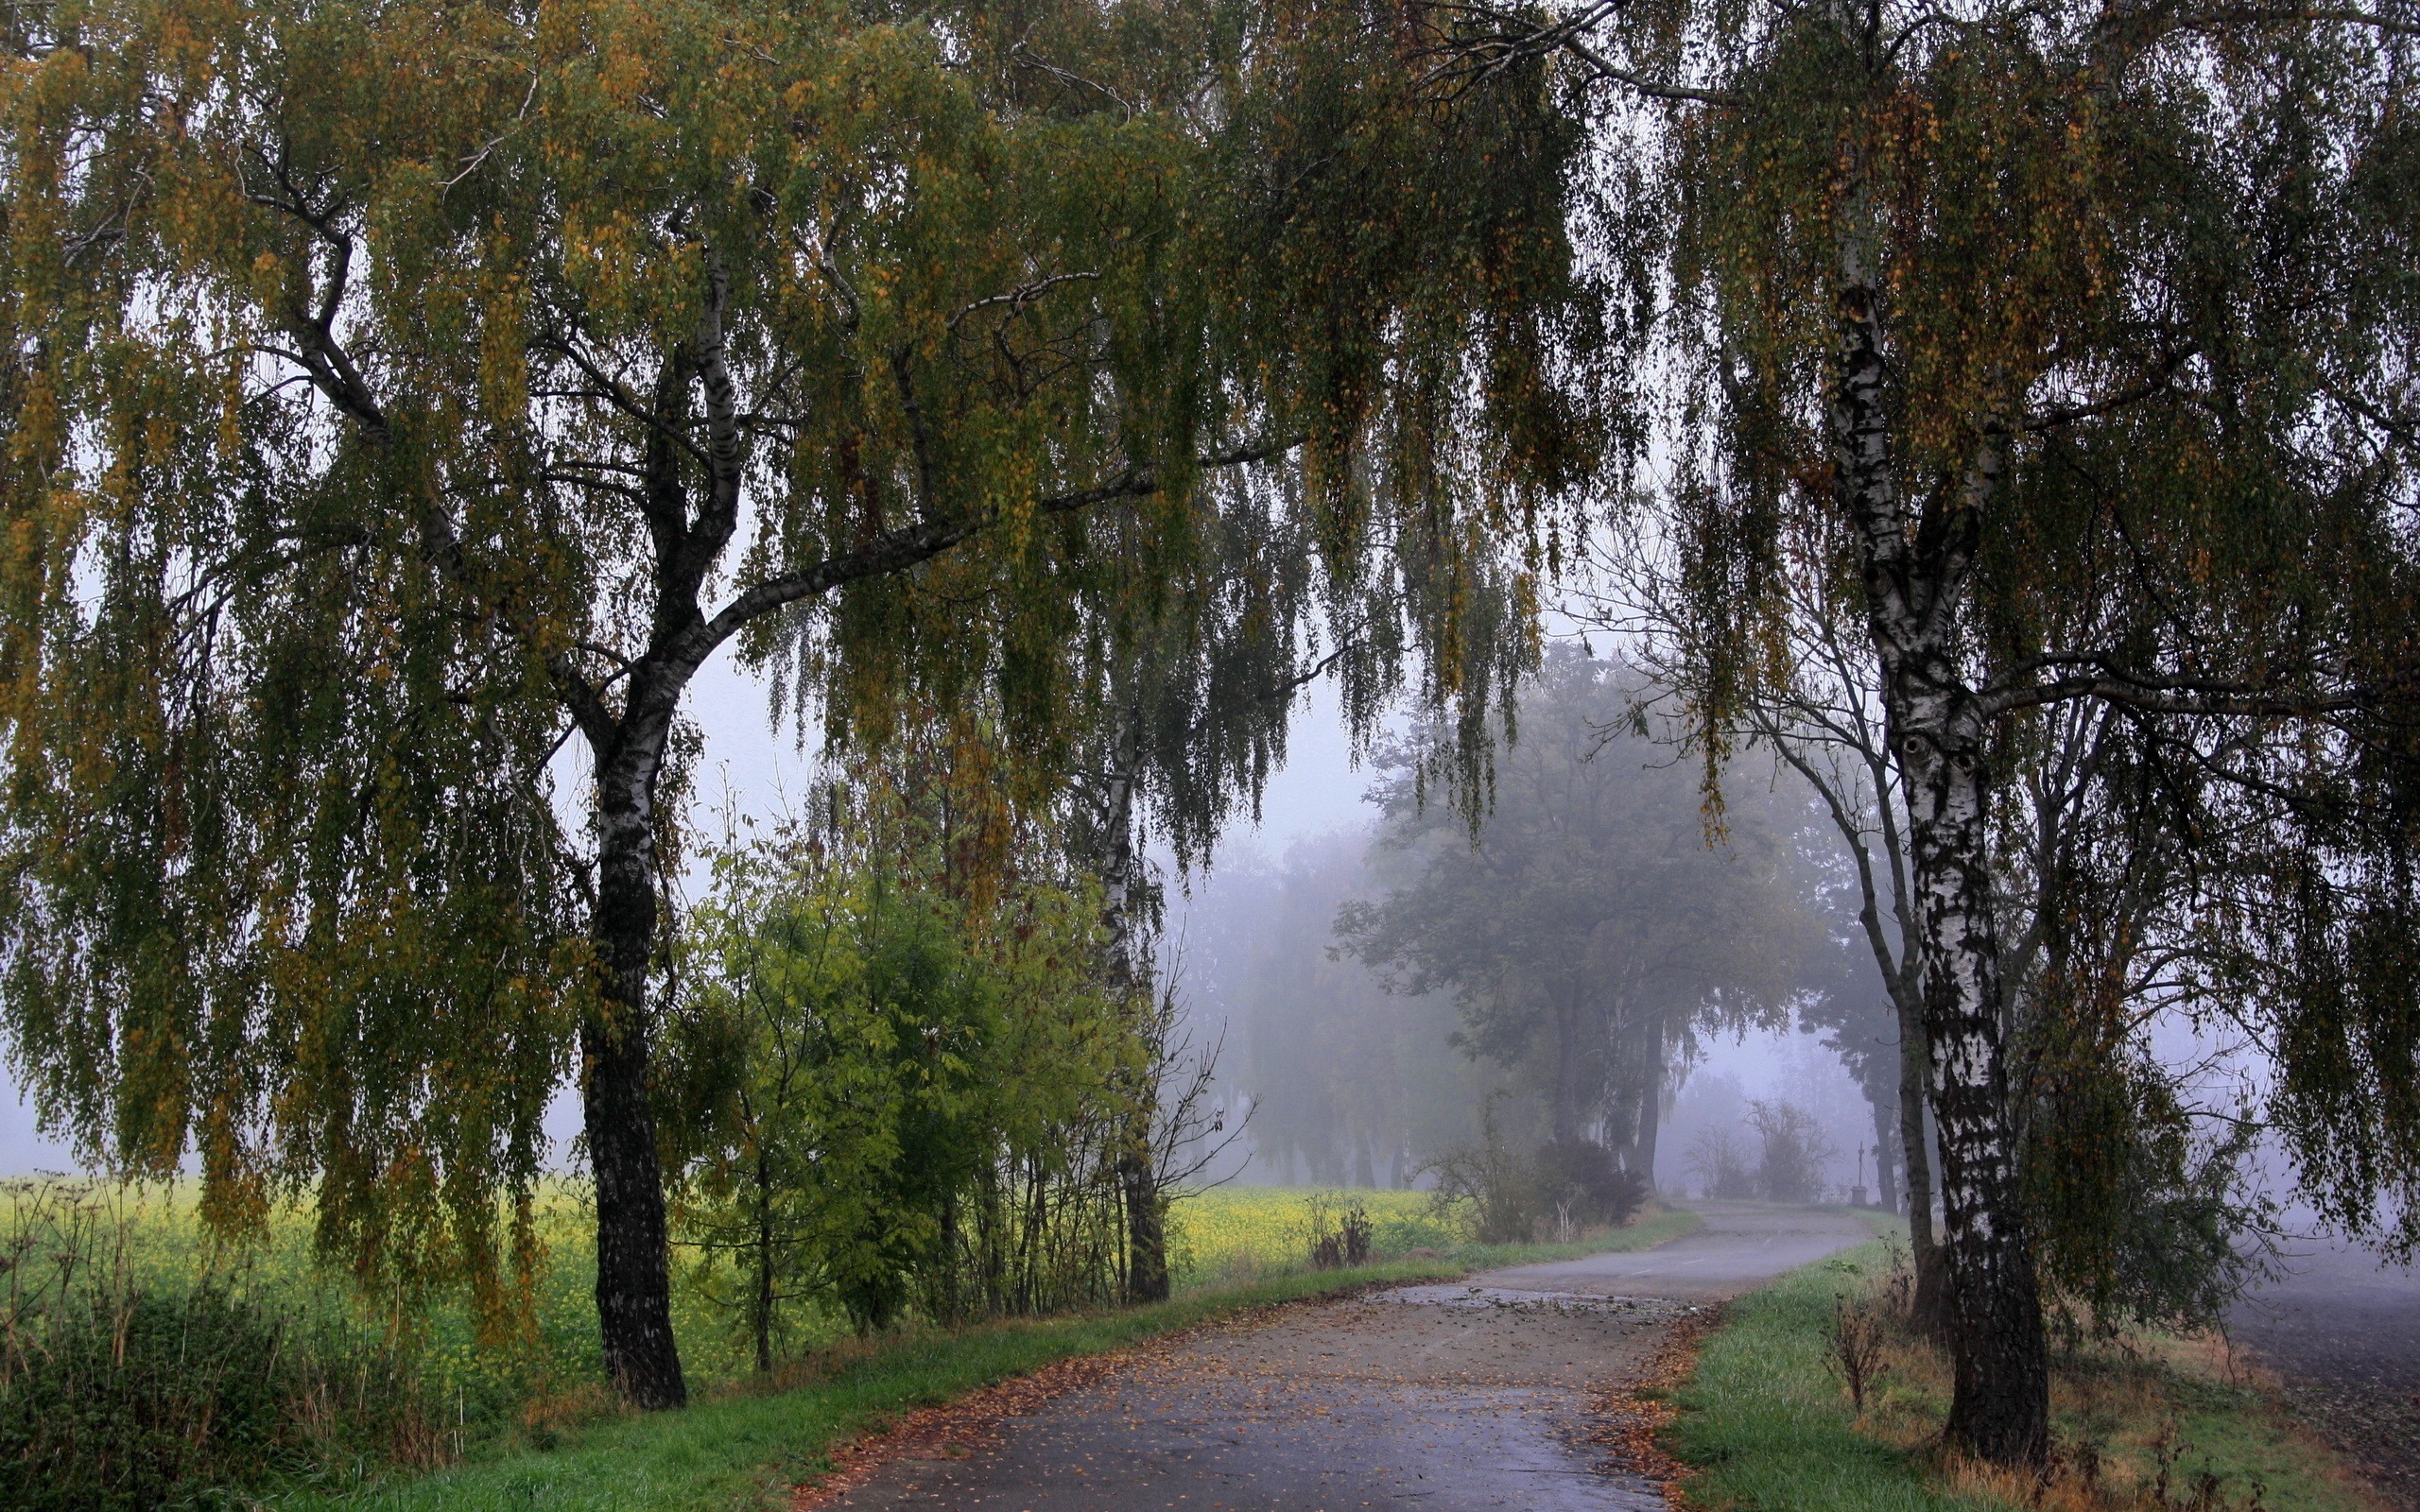 General 2560x1600 fall mist road birch foliage trees asphalt shrubs green grass gray outdoors wet road